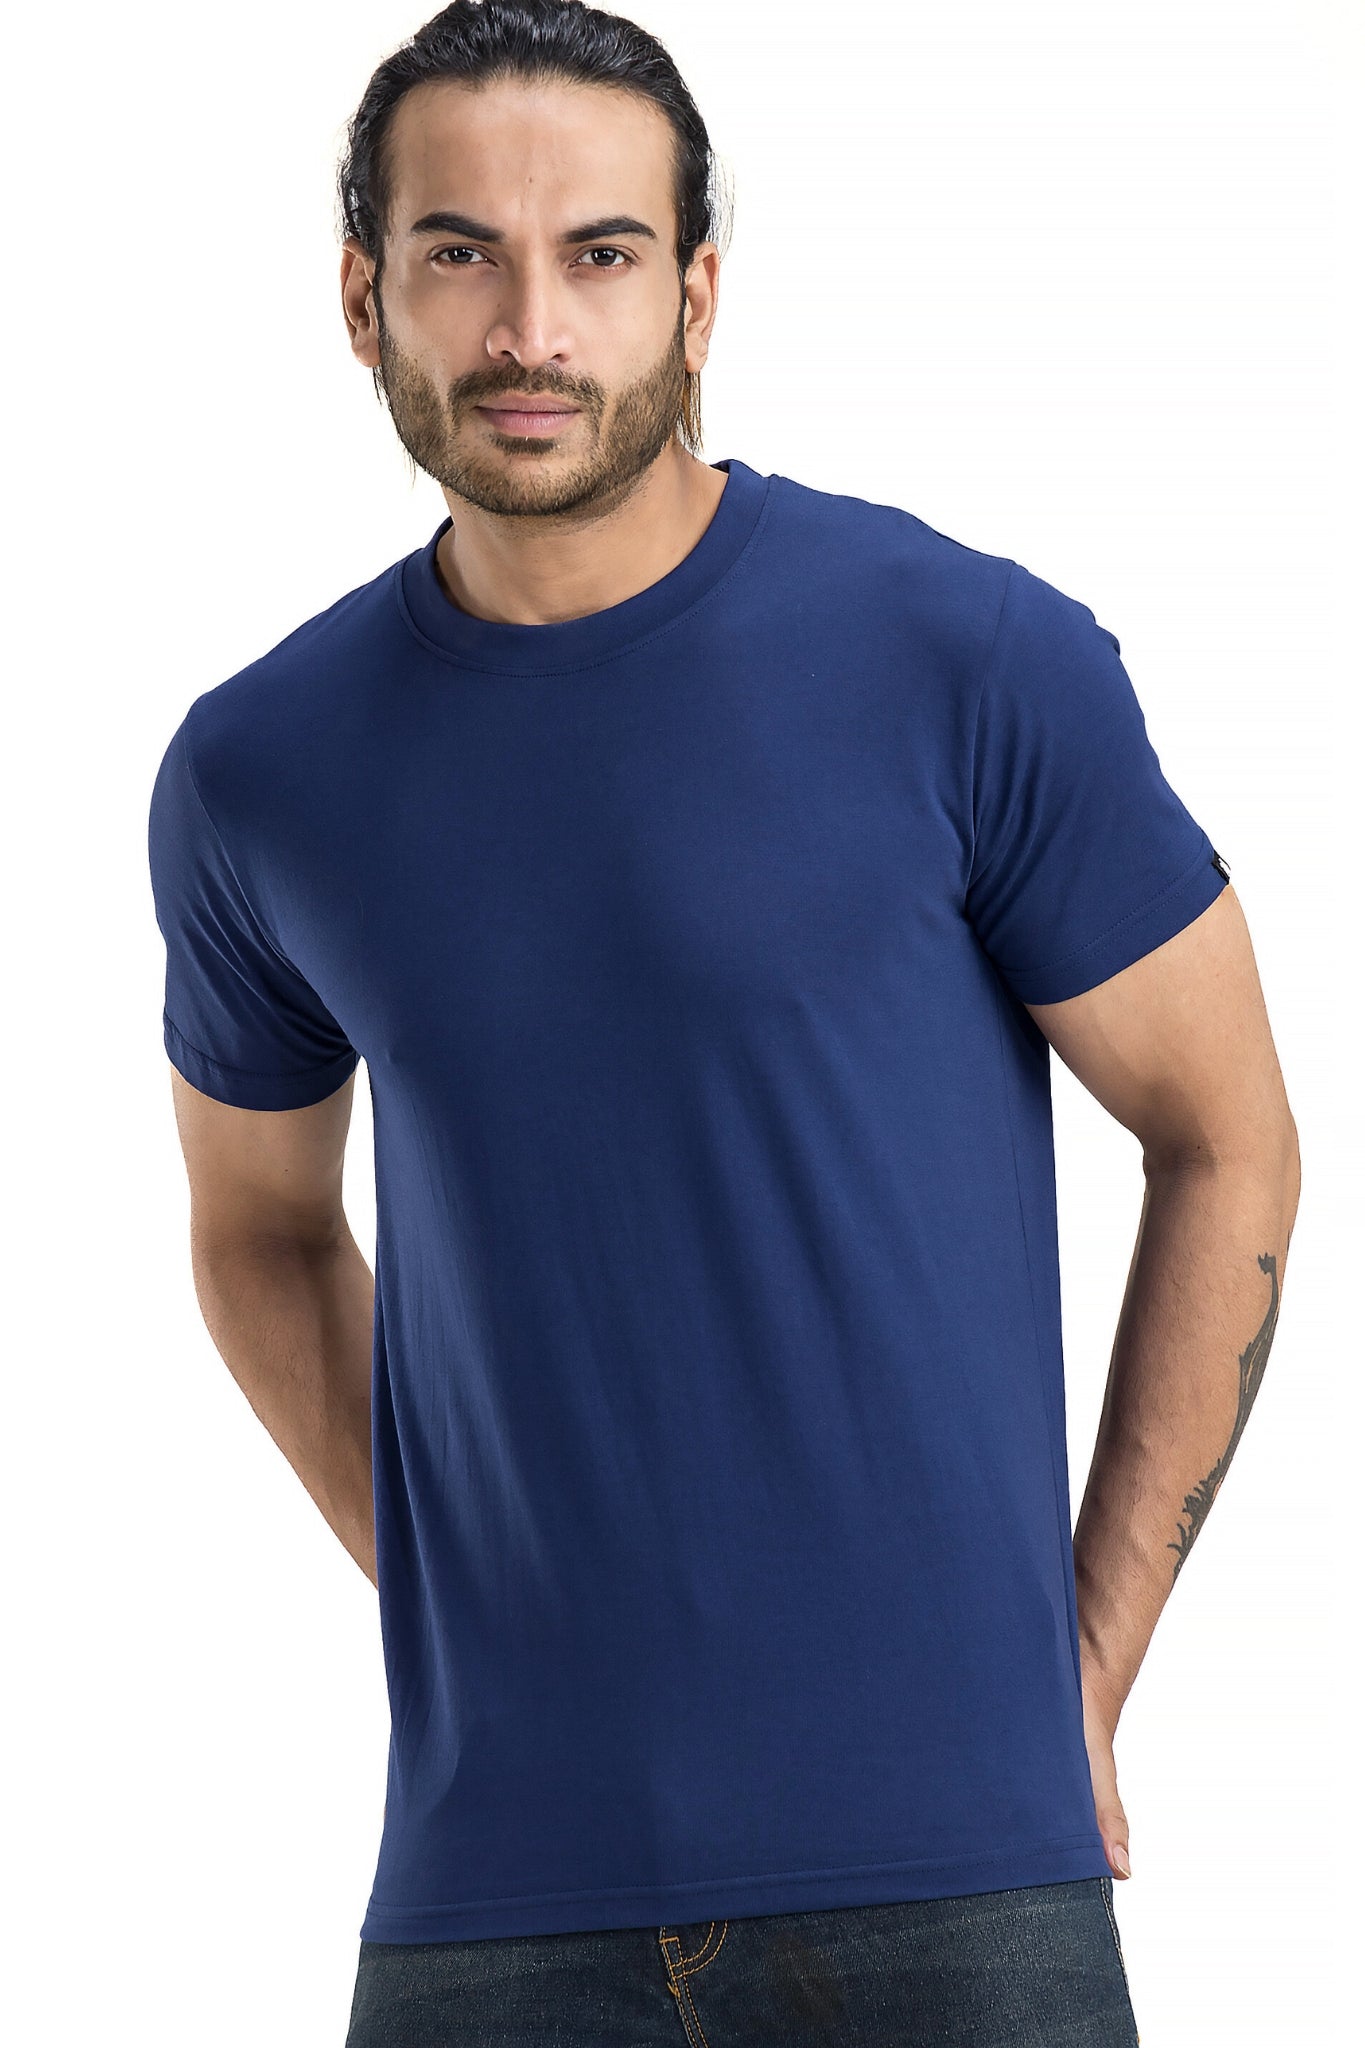 Men's Solid Basic Navy T-Shirt